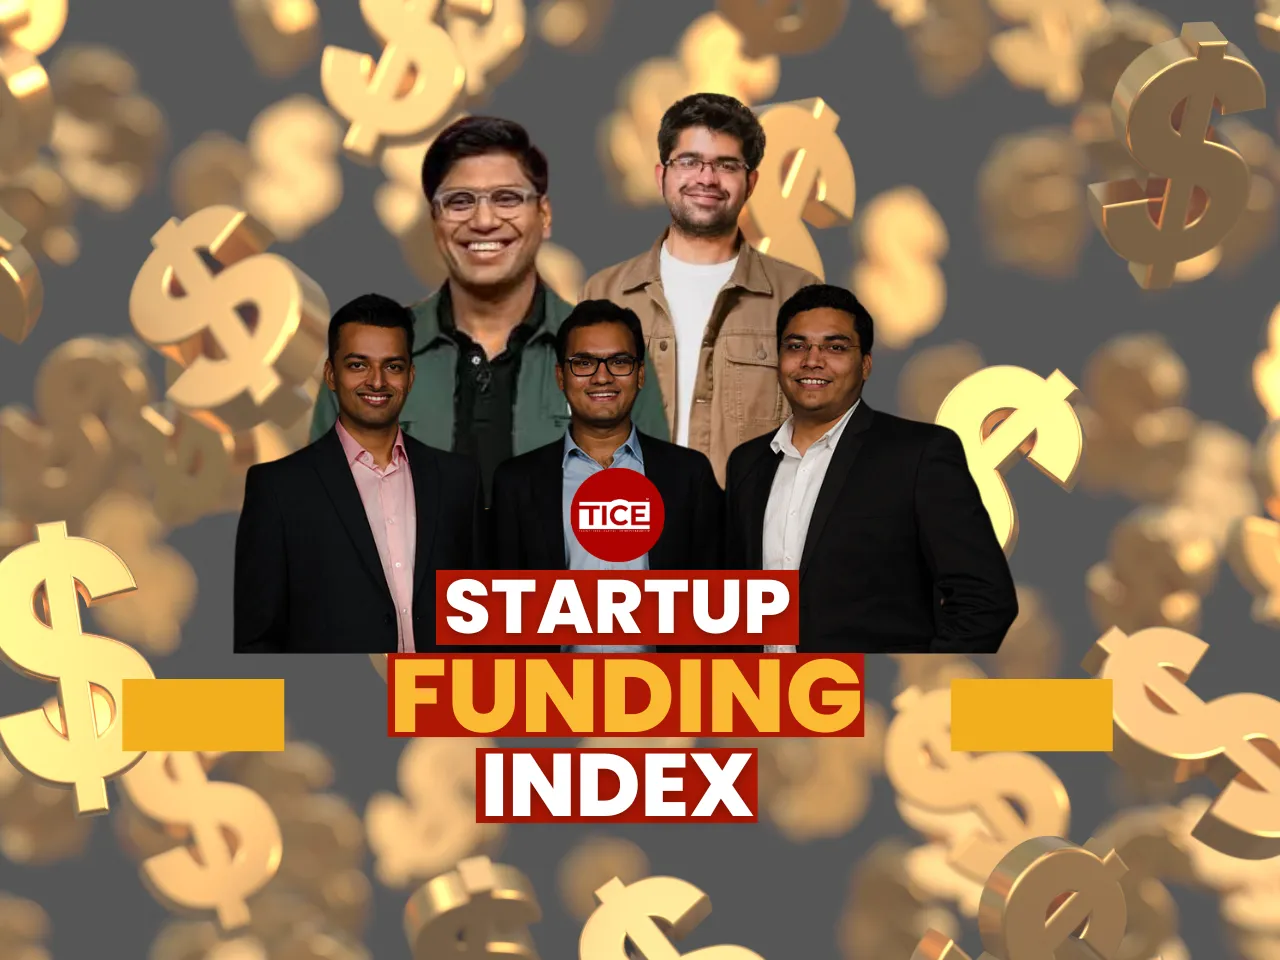 TICE Startup Funding Index